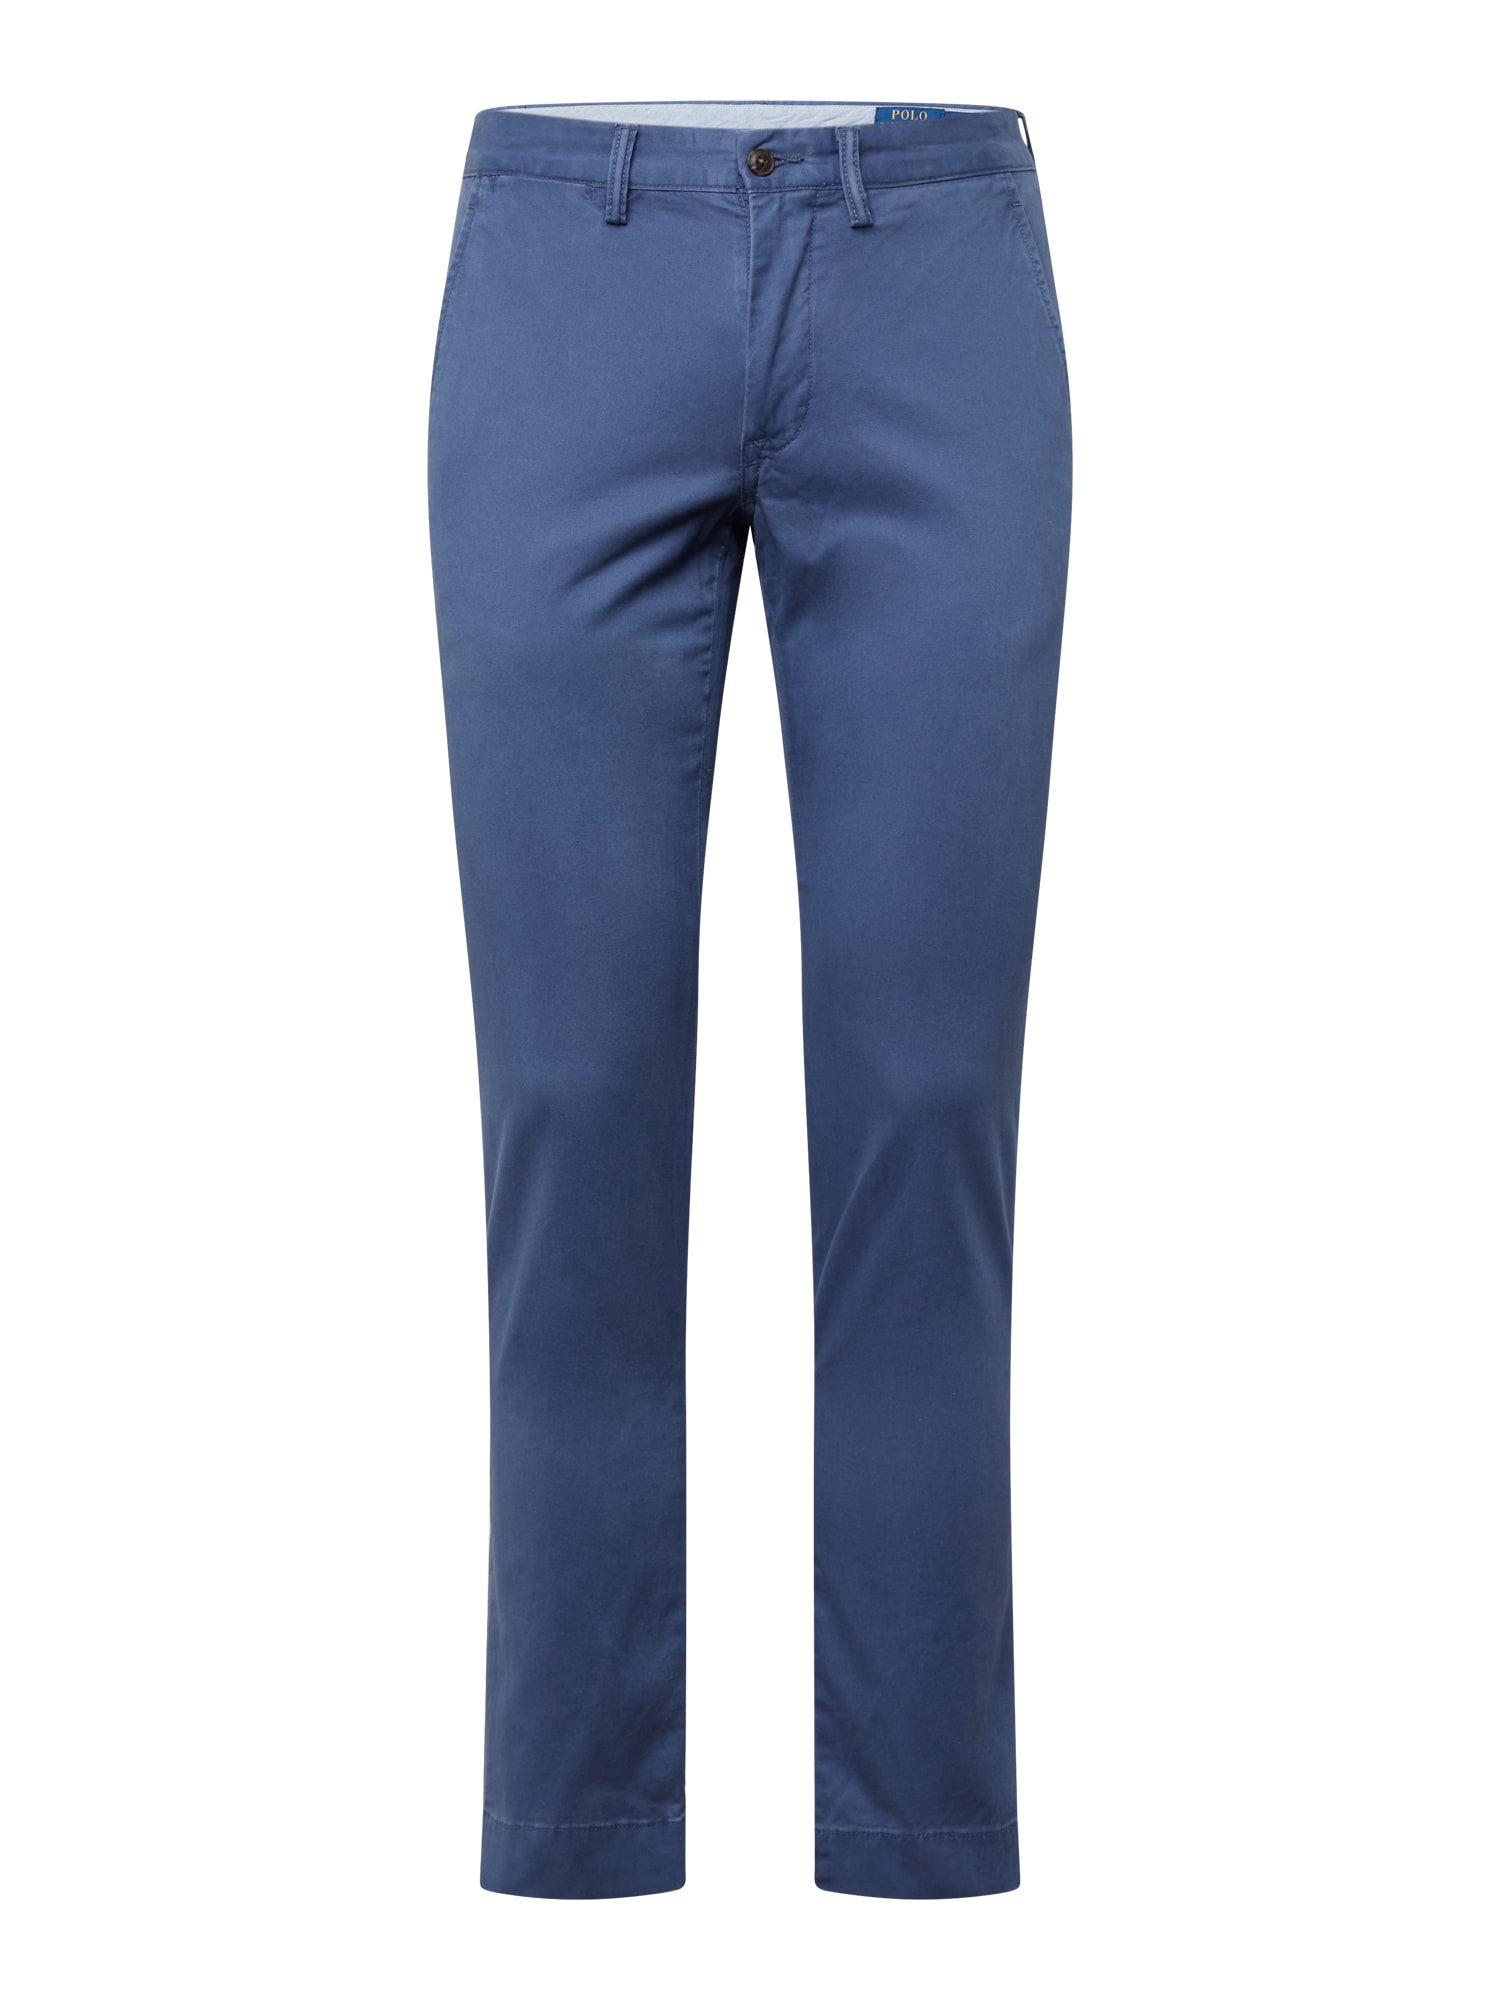 Polo Ralph Lauren Chino nohavice  námornícka modrá